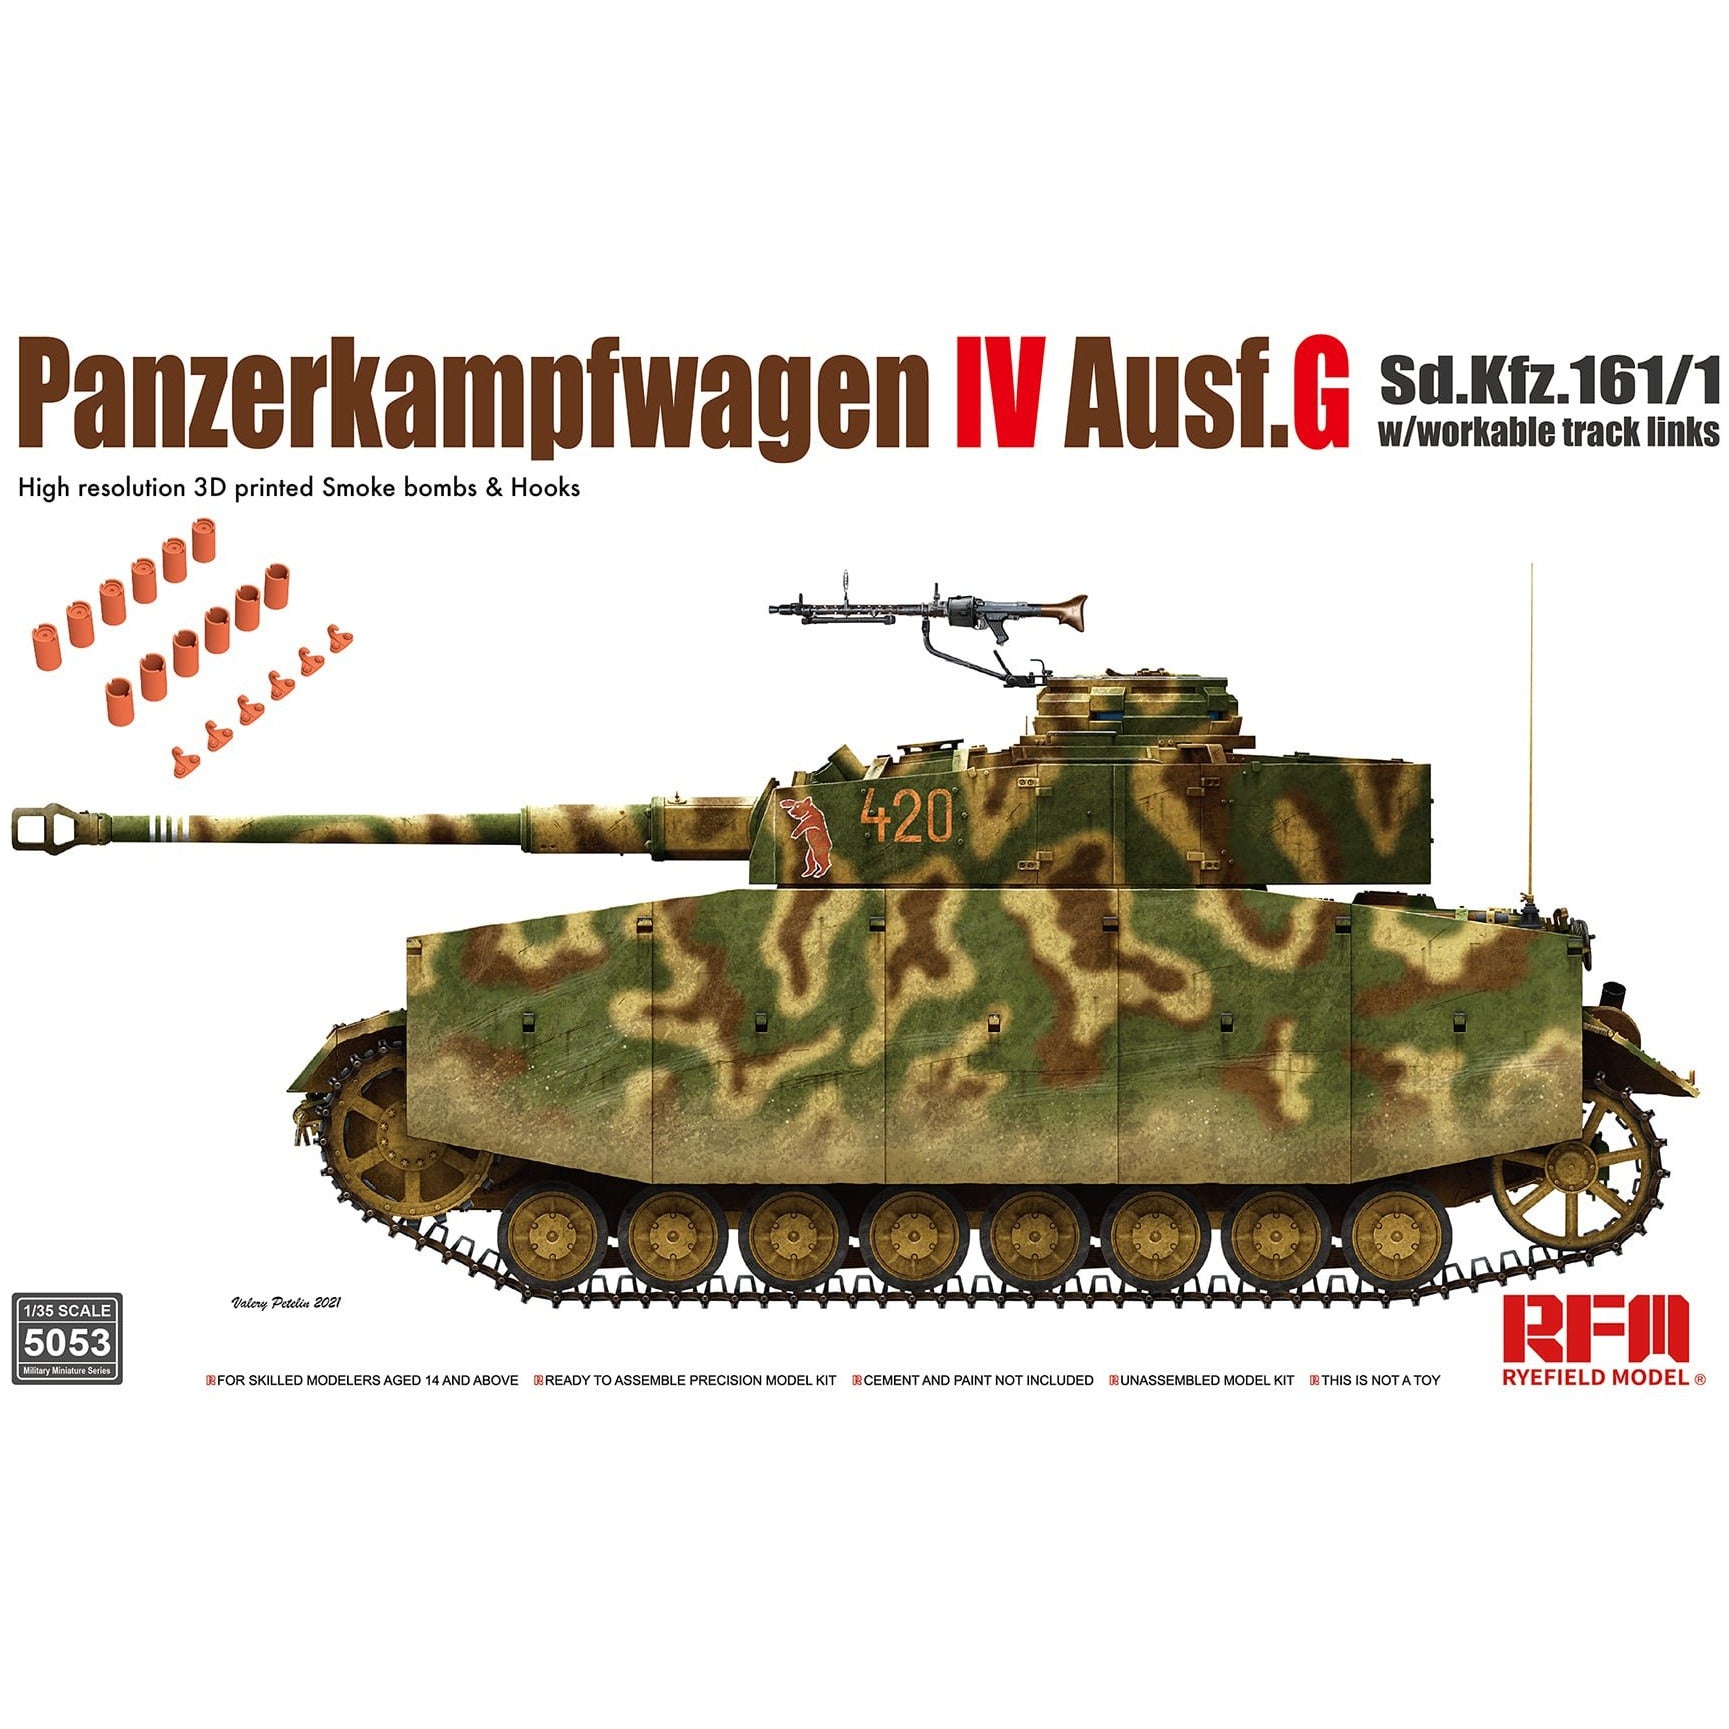 Panzerkampfwagen IV Ausf.J Sd.Kfz.161/1 w/ Workable Track Links 1/35 #5053 by Ryefield